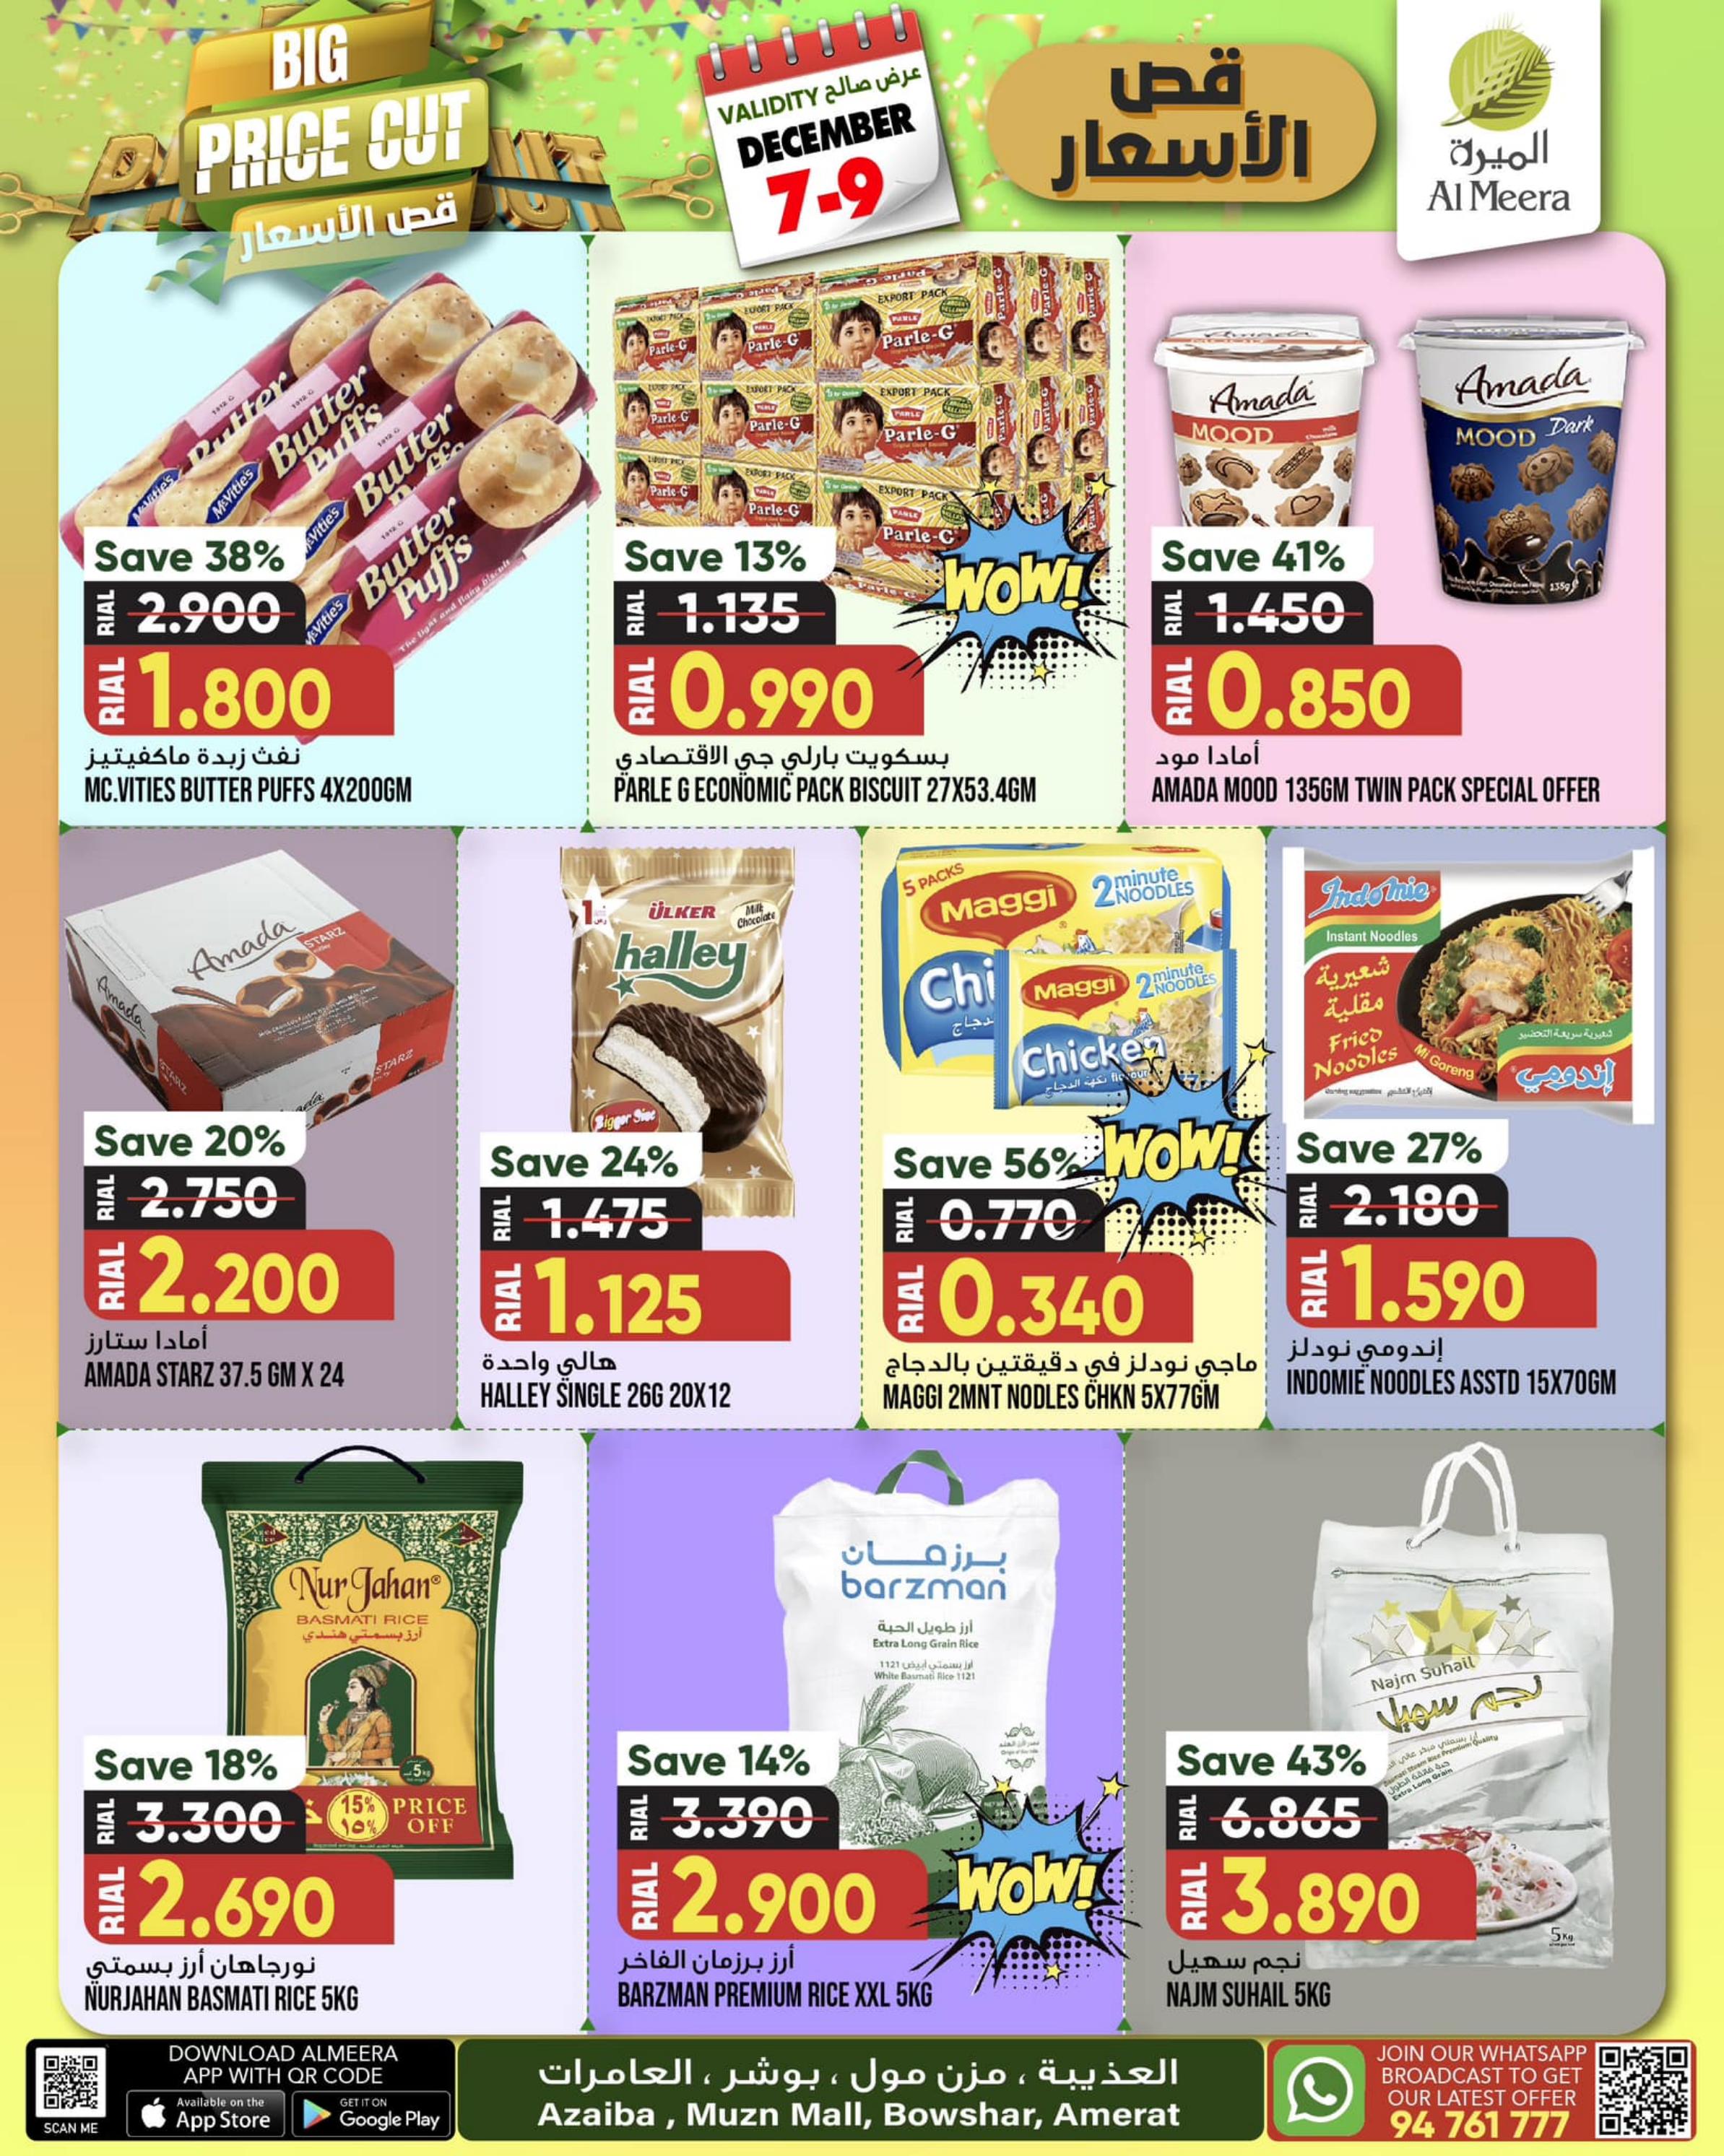 Page 5 at Big Price Cut promotions at Al Meera Oman